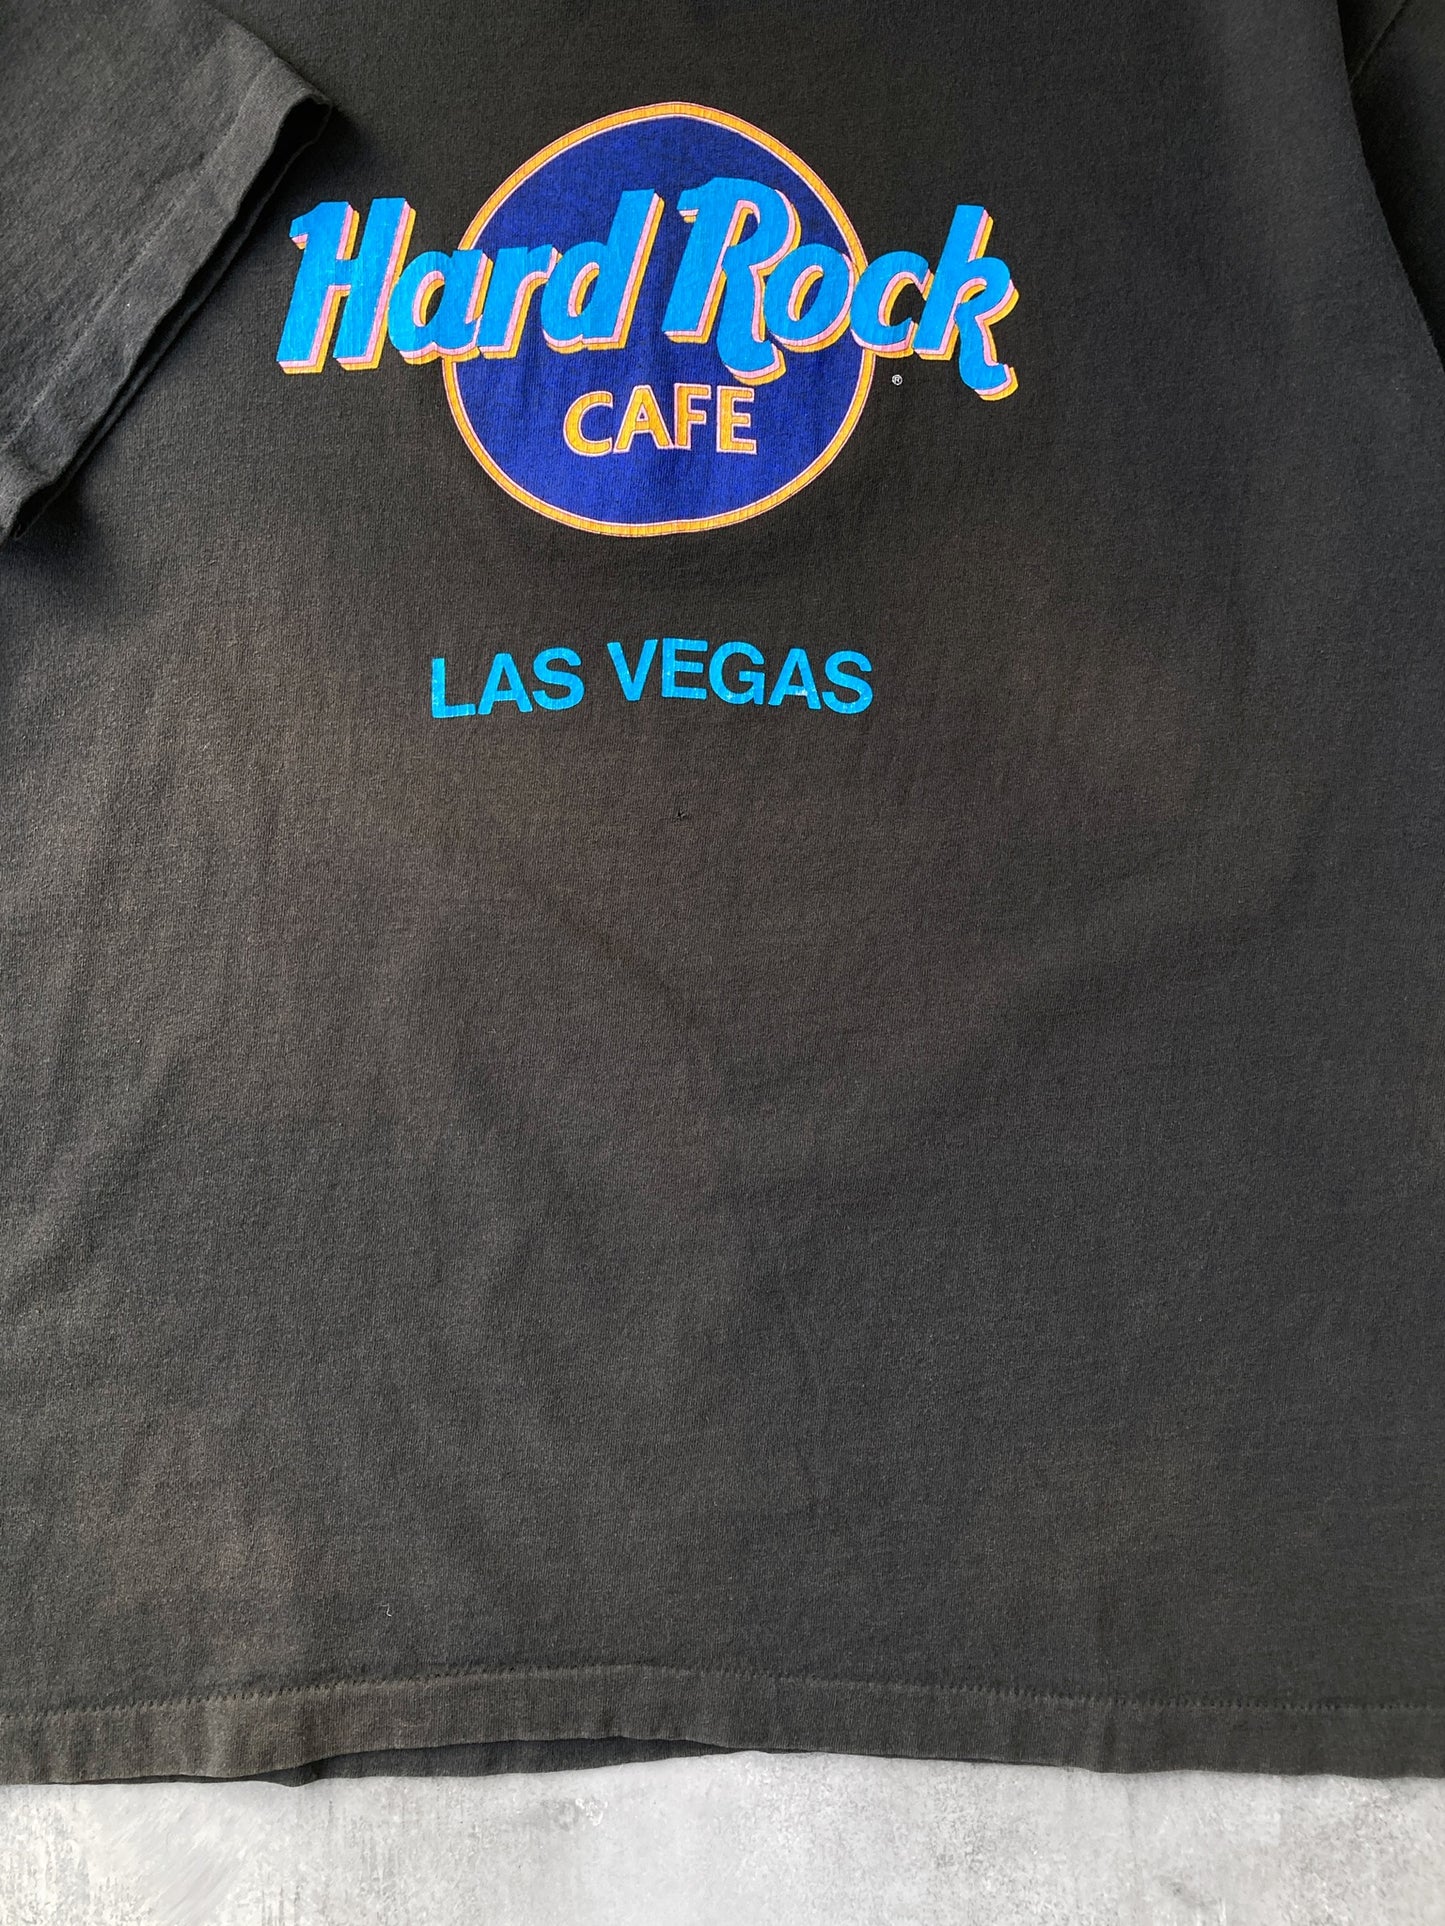 Hard Rock Las Vegas T-Shirt 90's - XL